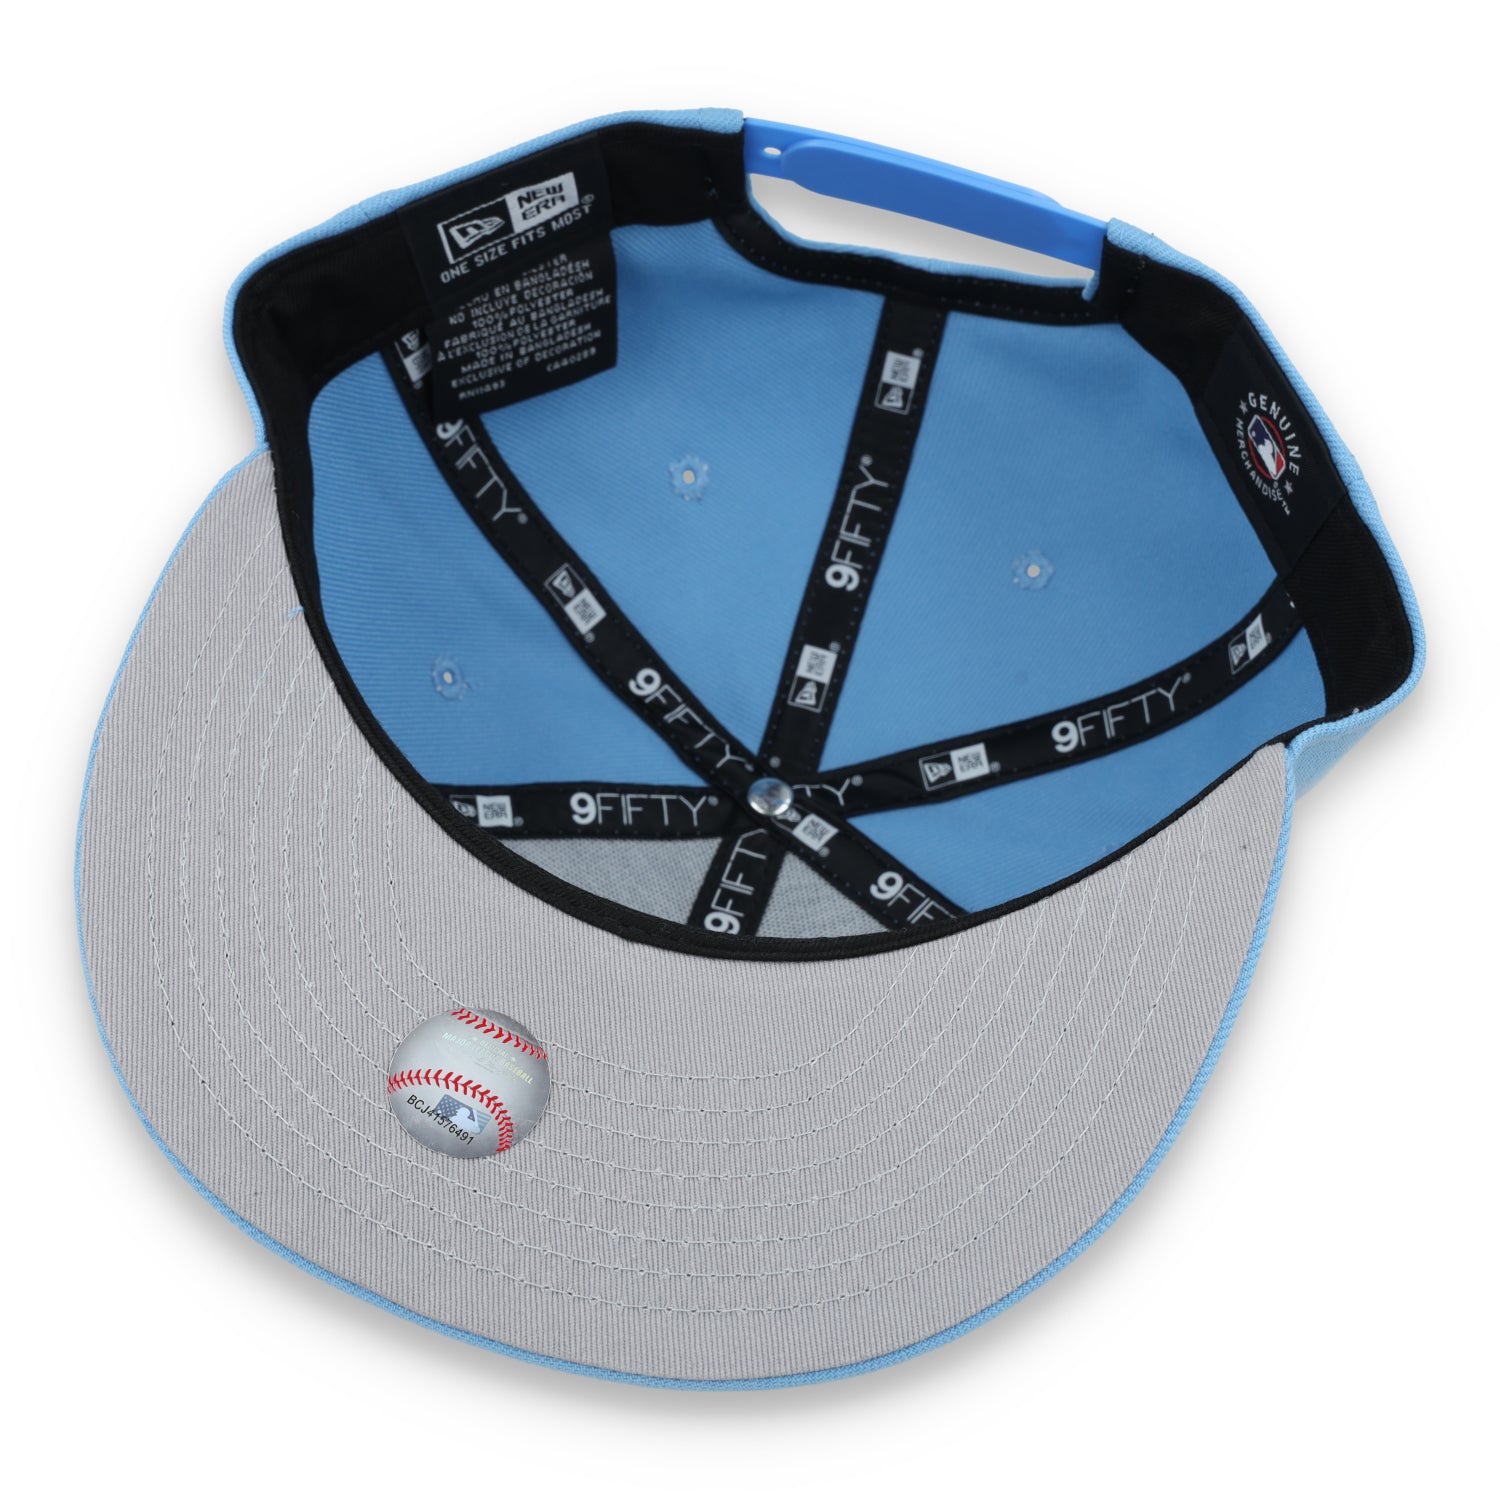 New Era New York Yankees 9FIFTY Snapback Hat - Sky Blue